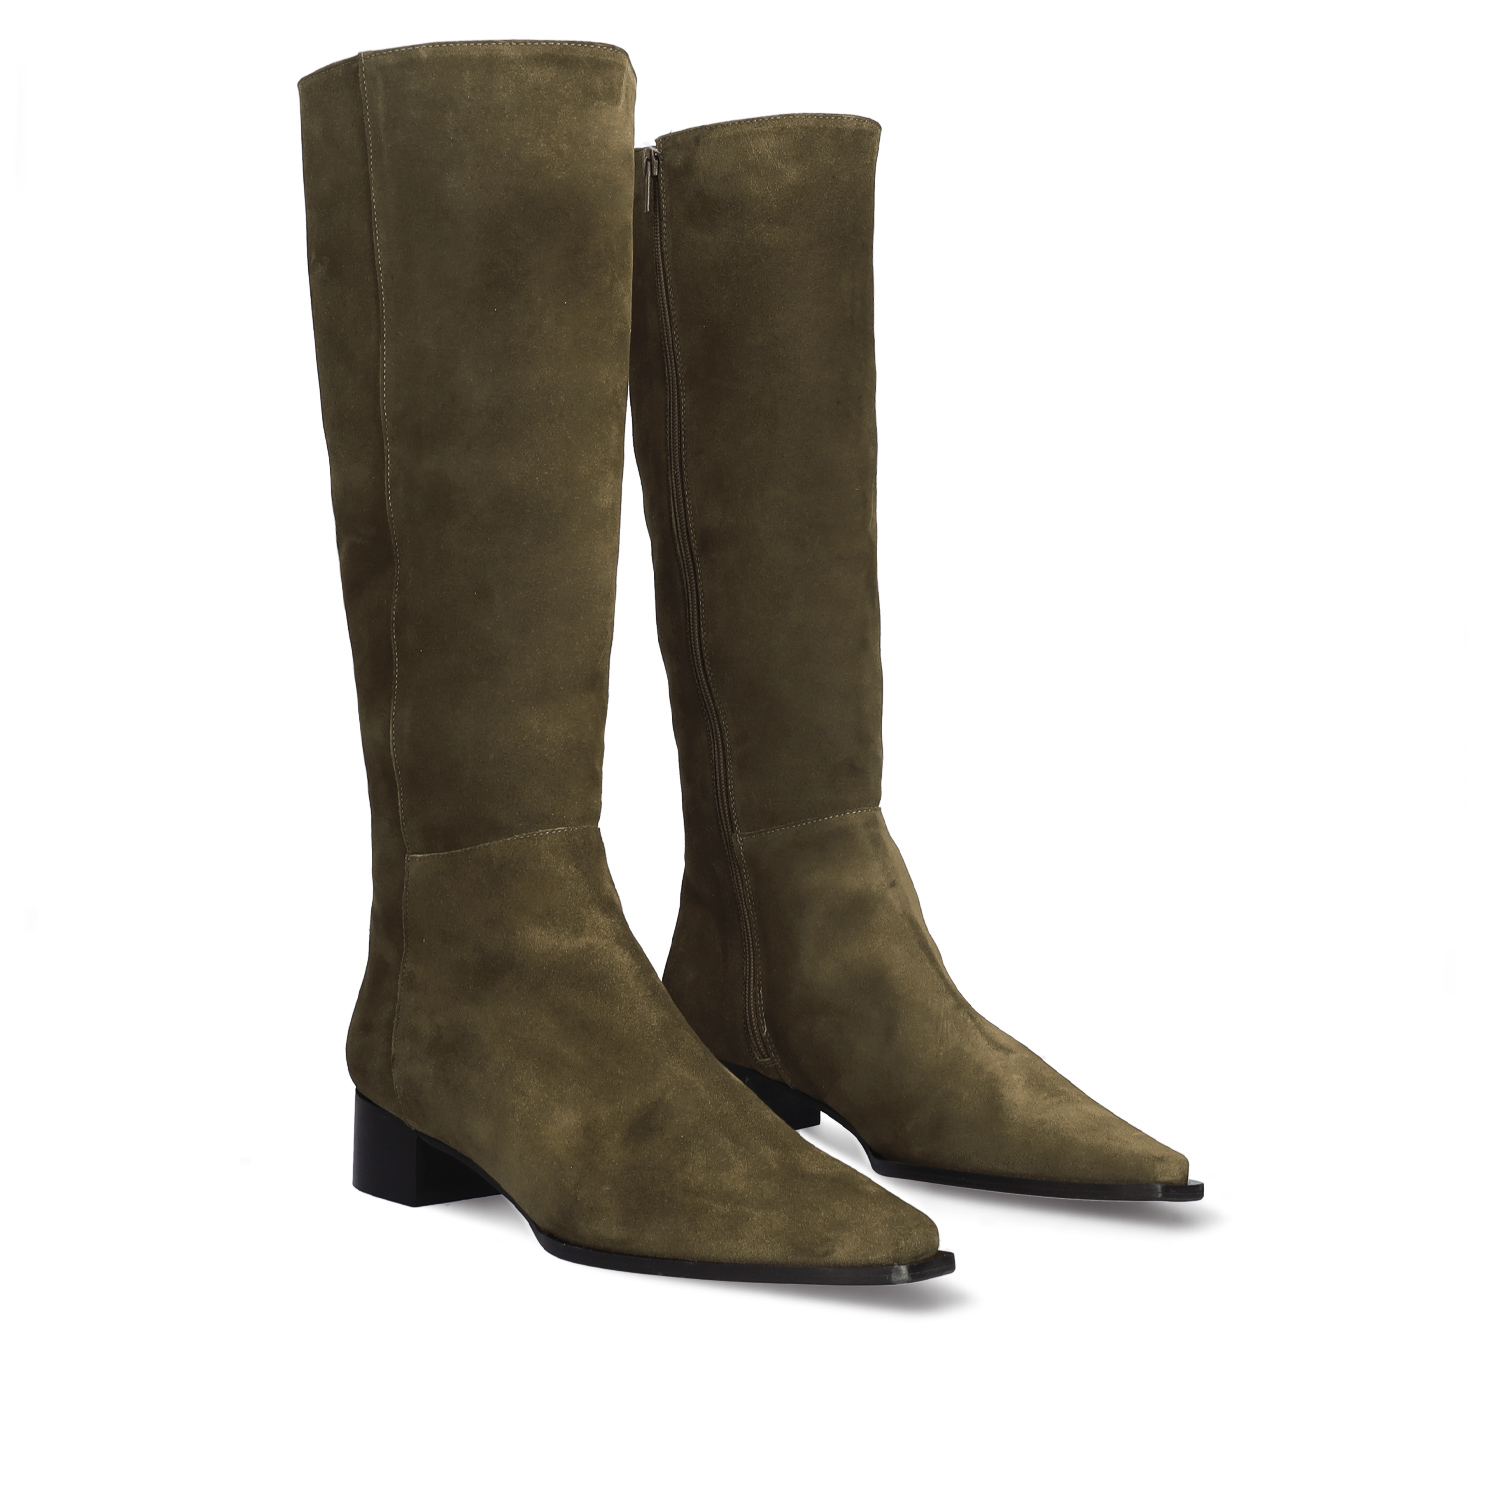 Knee-high boots in kaki split leather 